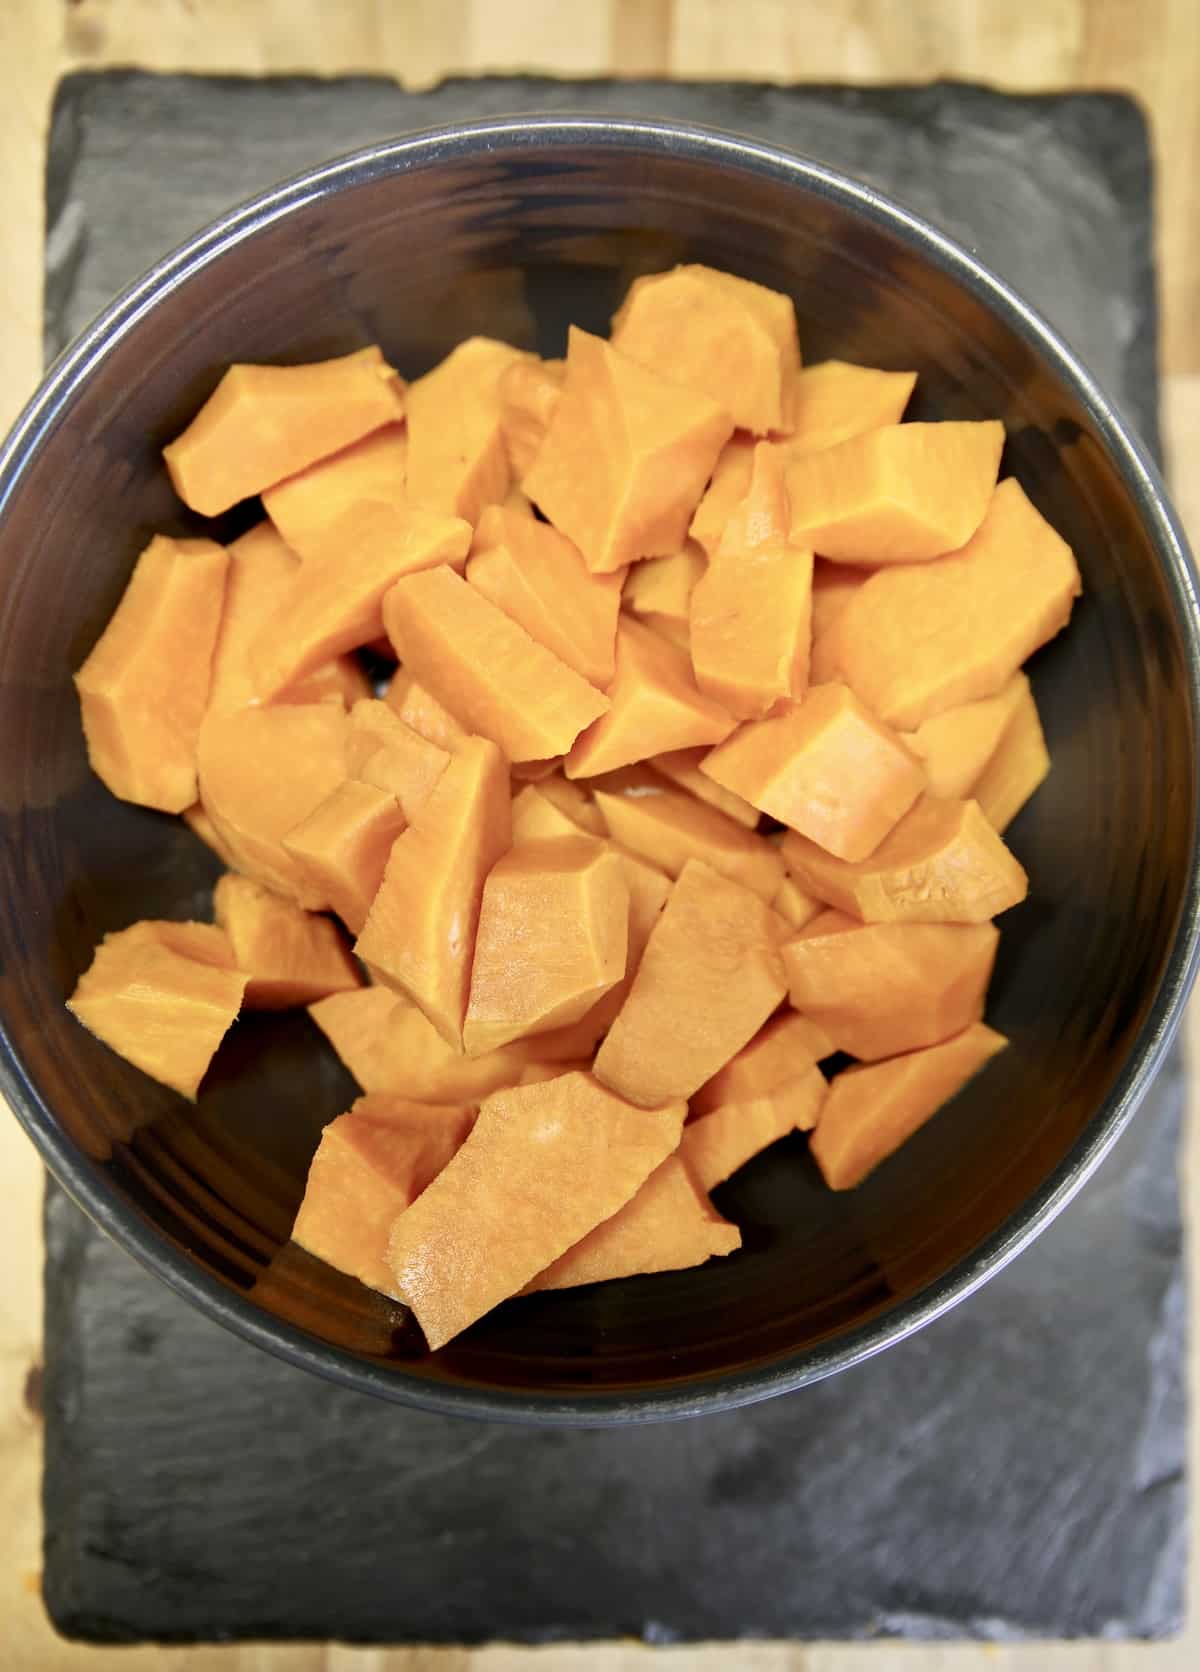 Bowl of diced sweet potatoes.